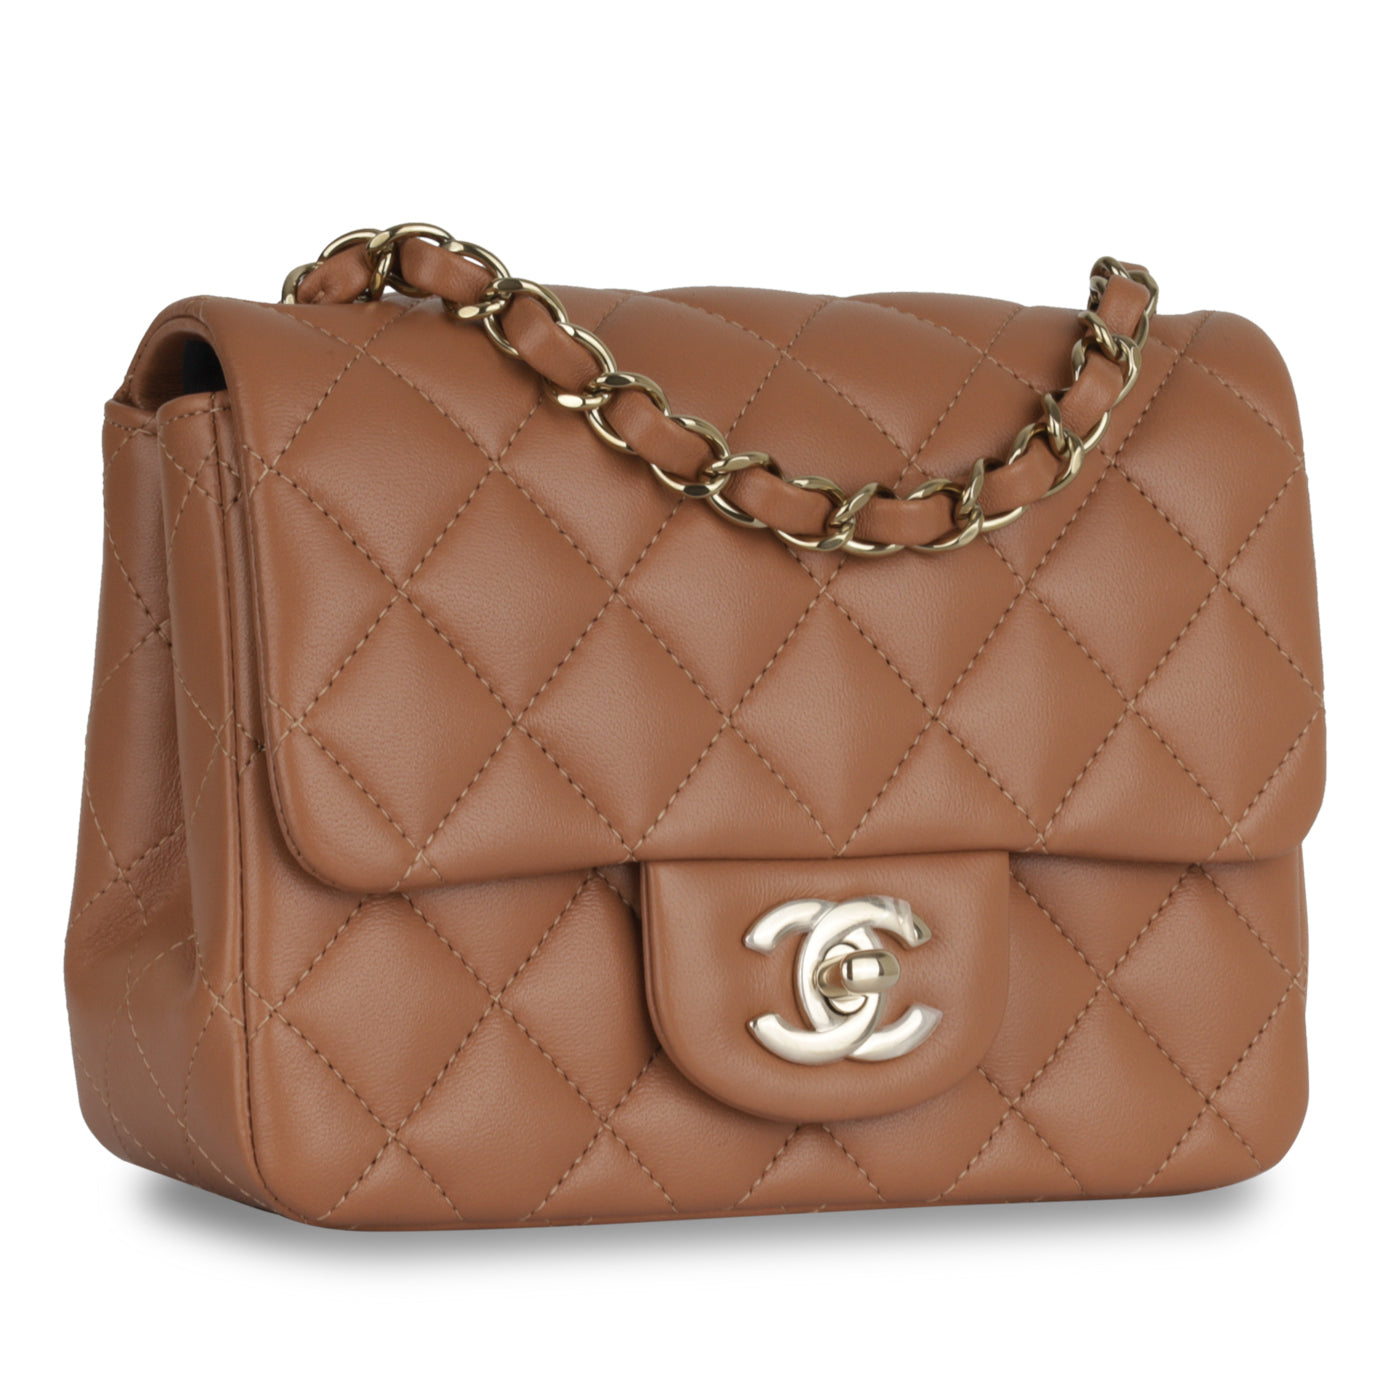 Chanel - Mini Square Classic Flap Bag - Caramel Lambskin - CGHW - Brand New